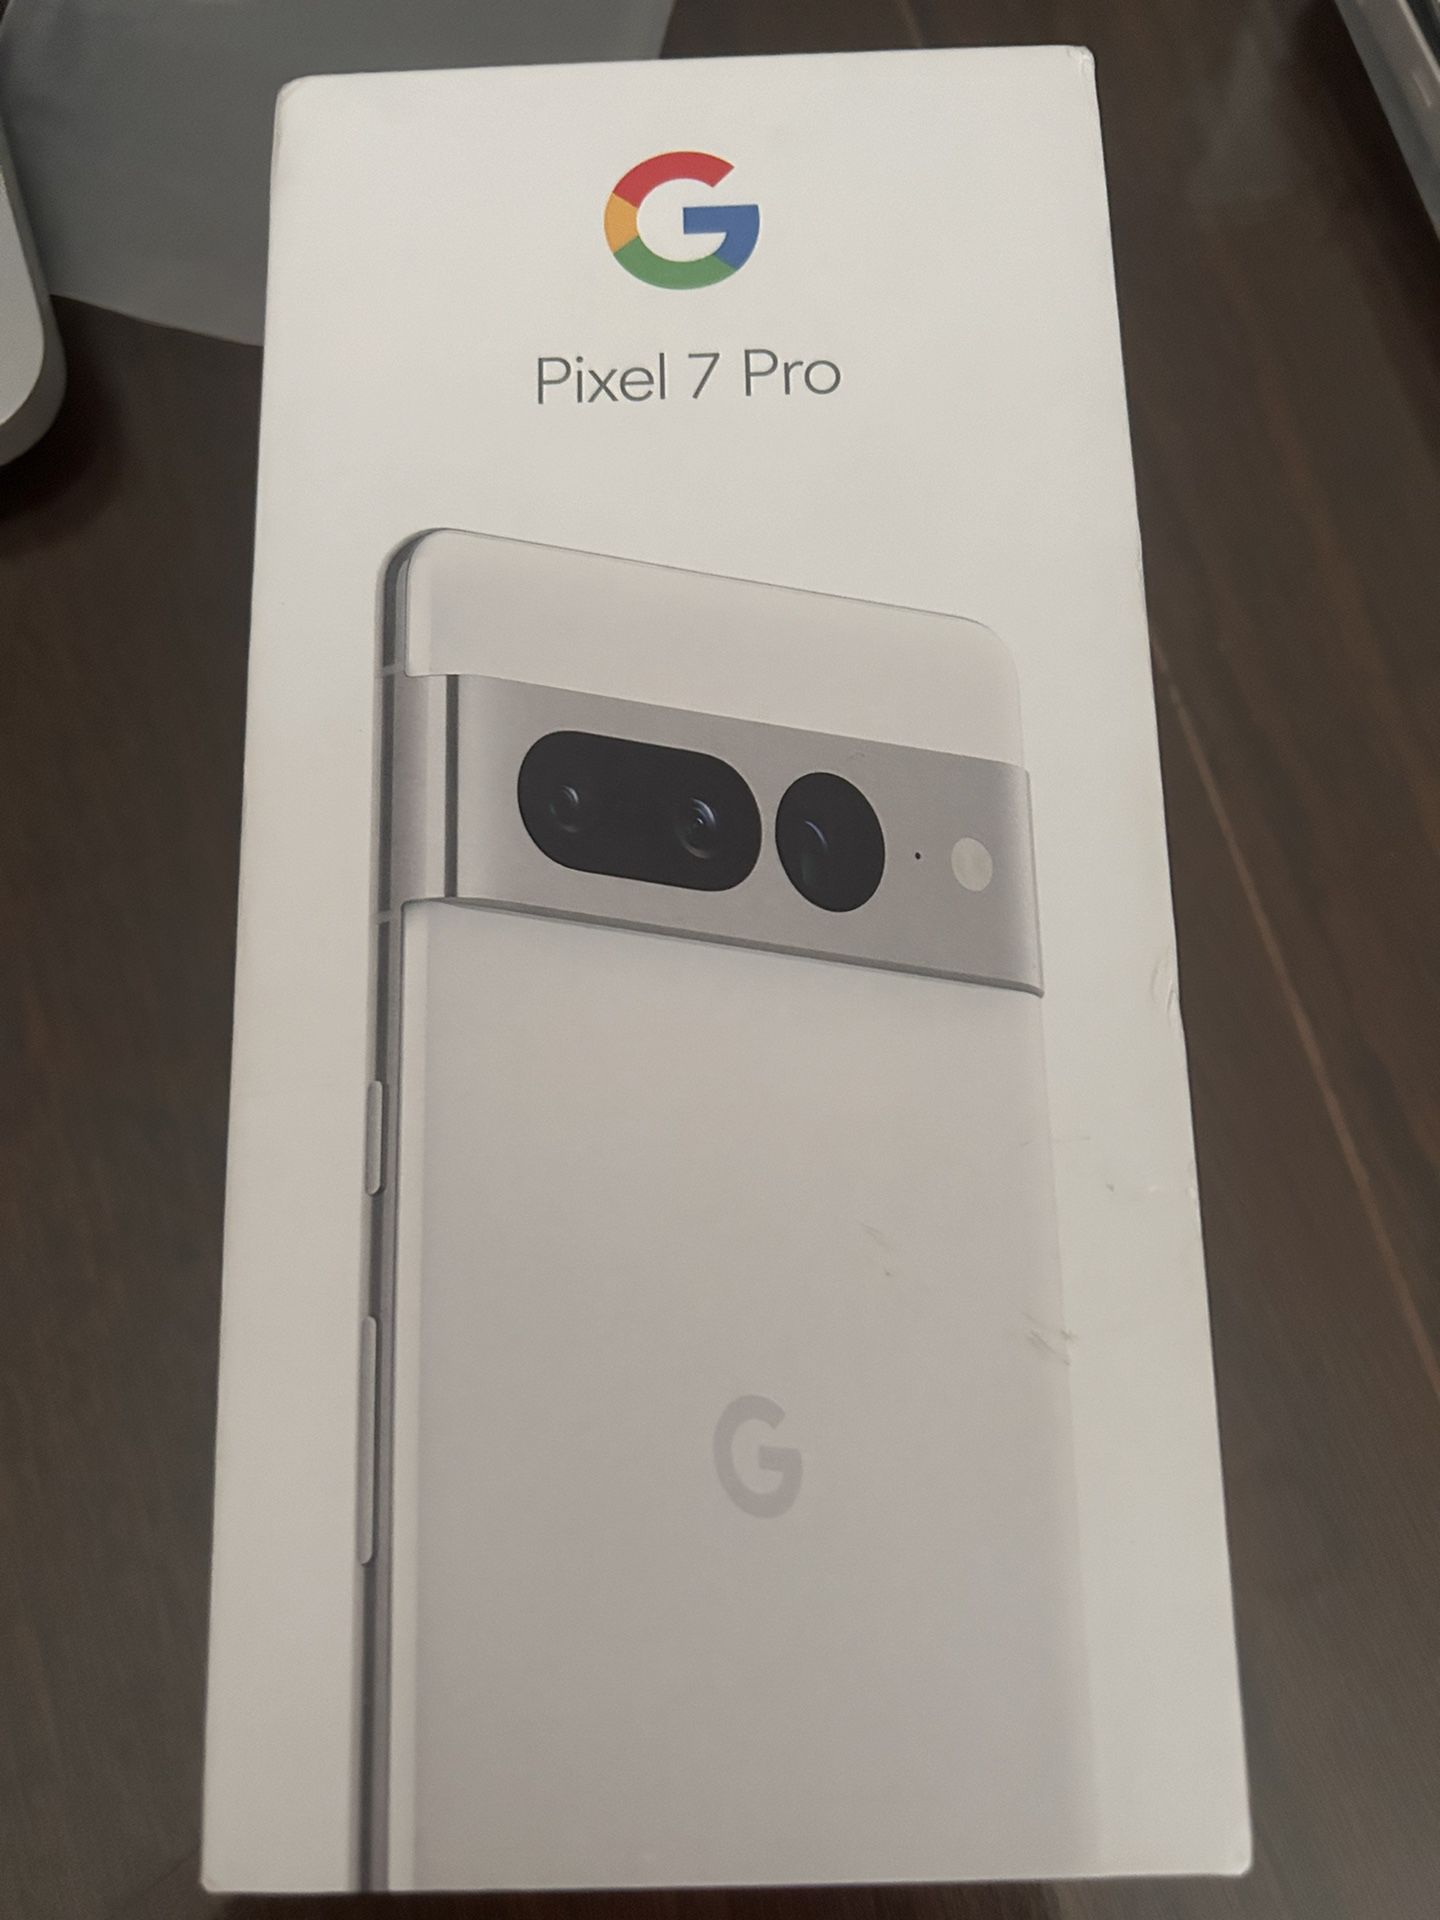 Google Pixel 7 Pro 128G Unlock $400